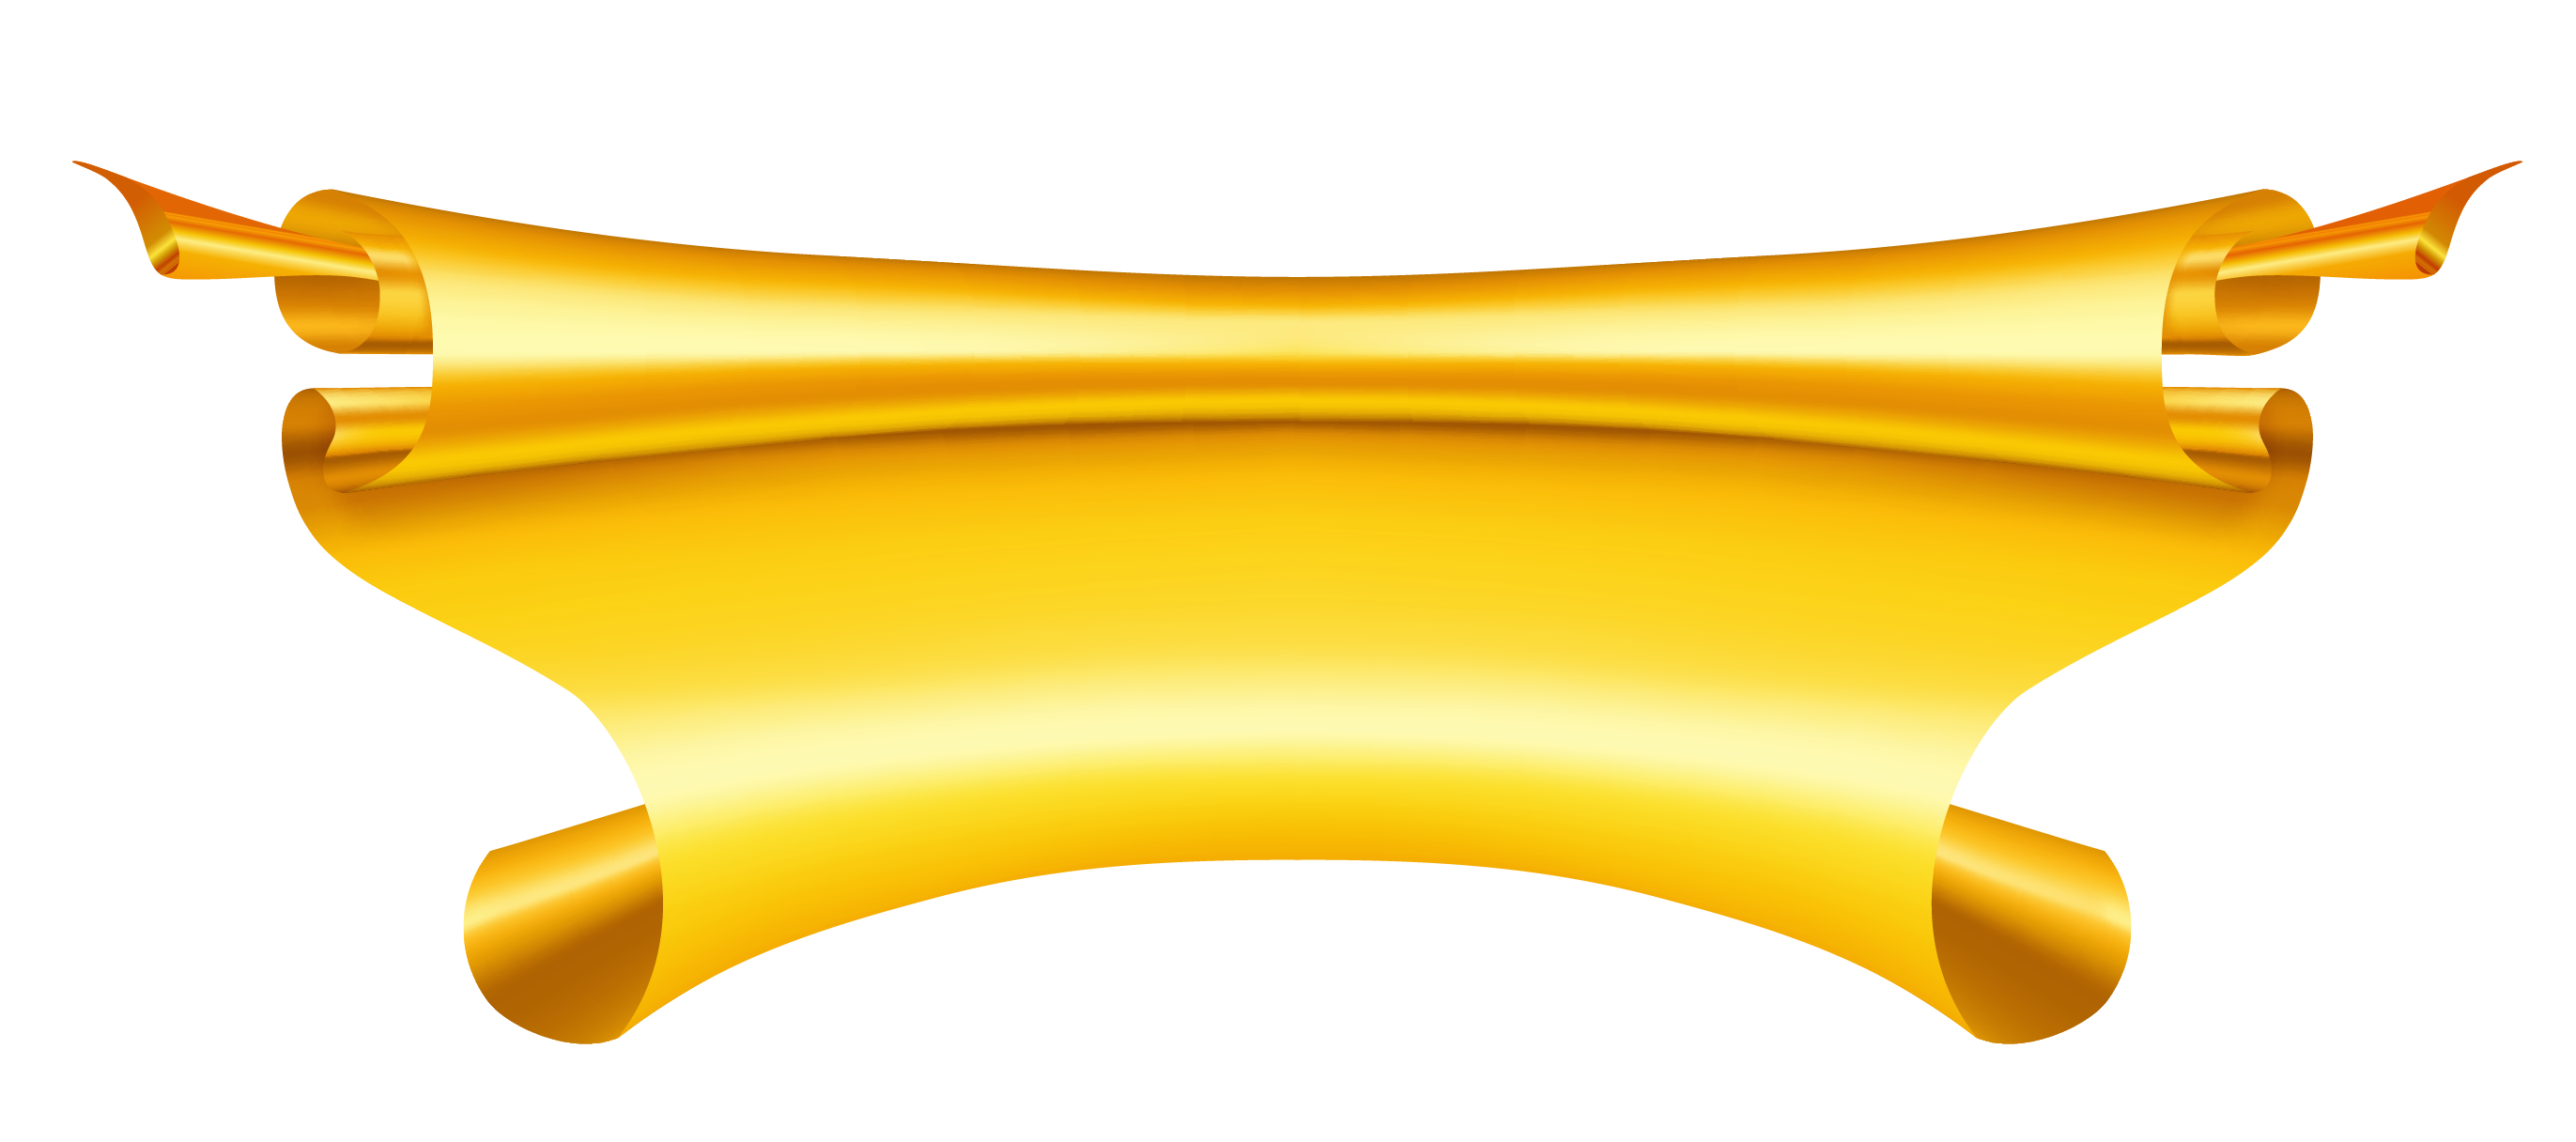 Gold ribbon banner clip art 